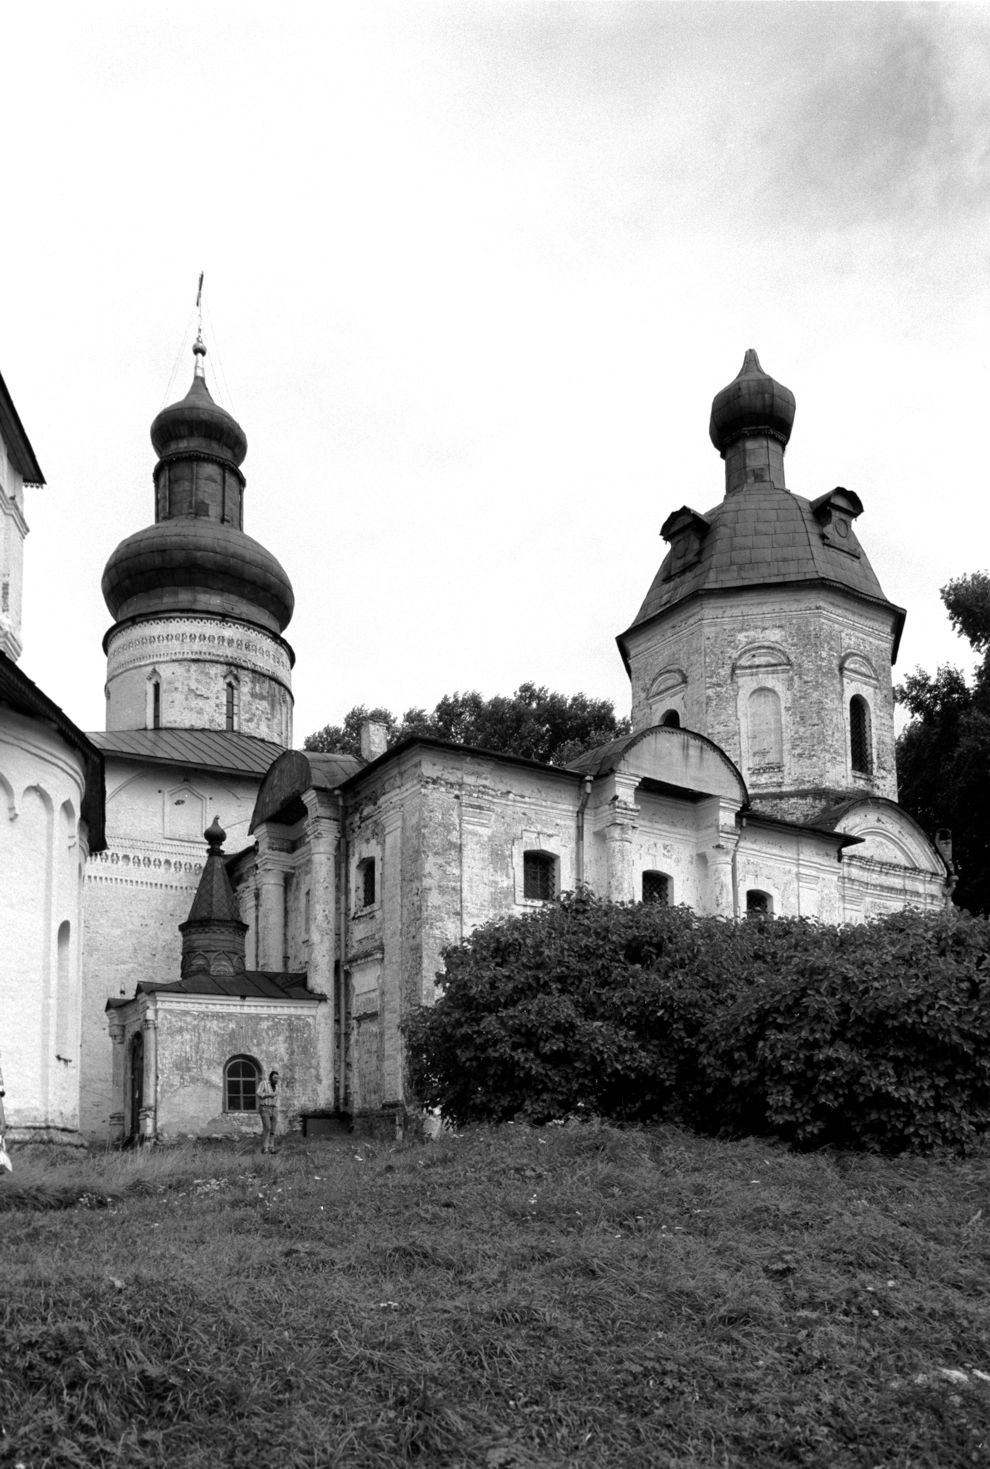 Kirillov
Russia. Vologda Region. Kirillovskii District
St. Kirill-Belozersk monastery
Church of St. Kirill
1991-08-08
© Photographs by William Brumfield